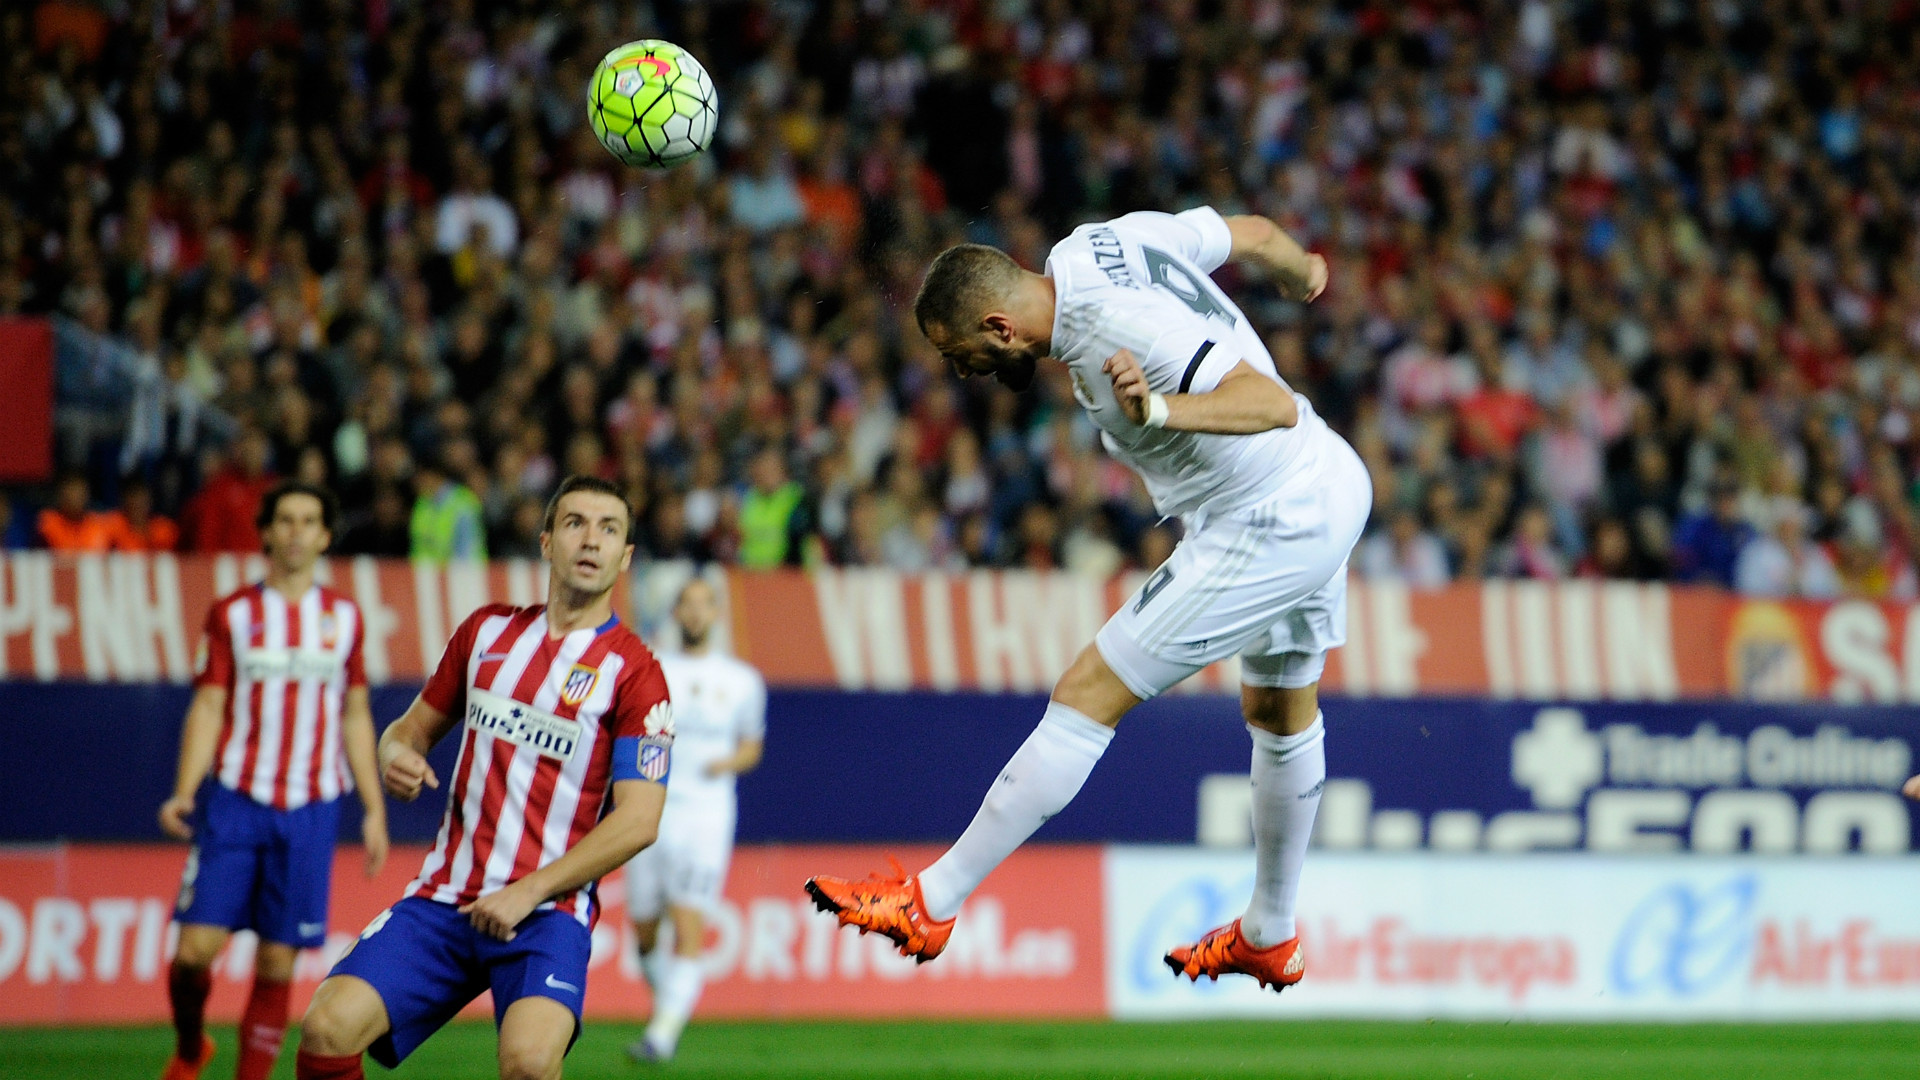 Mondogol: derby Madrid, Atletico a -9 se vince il Real